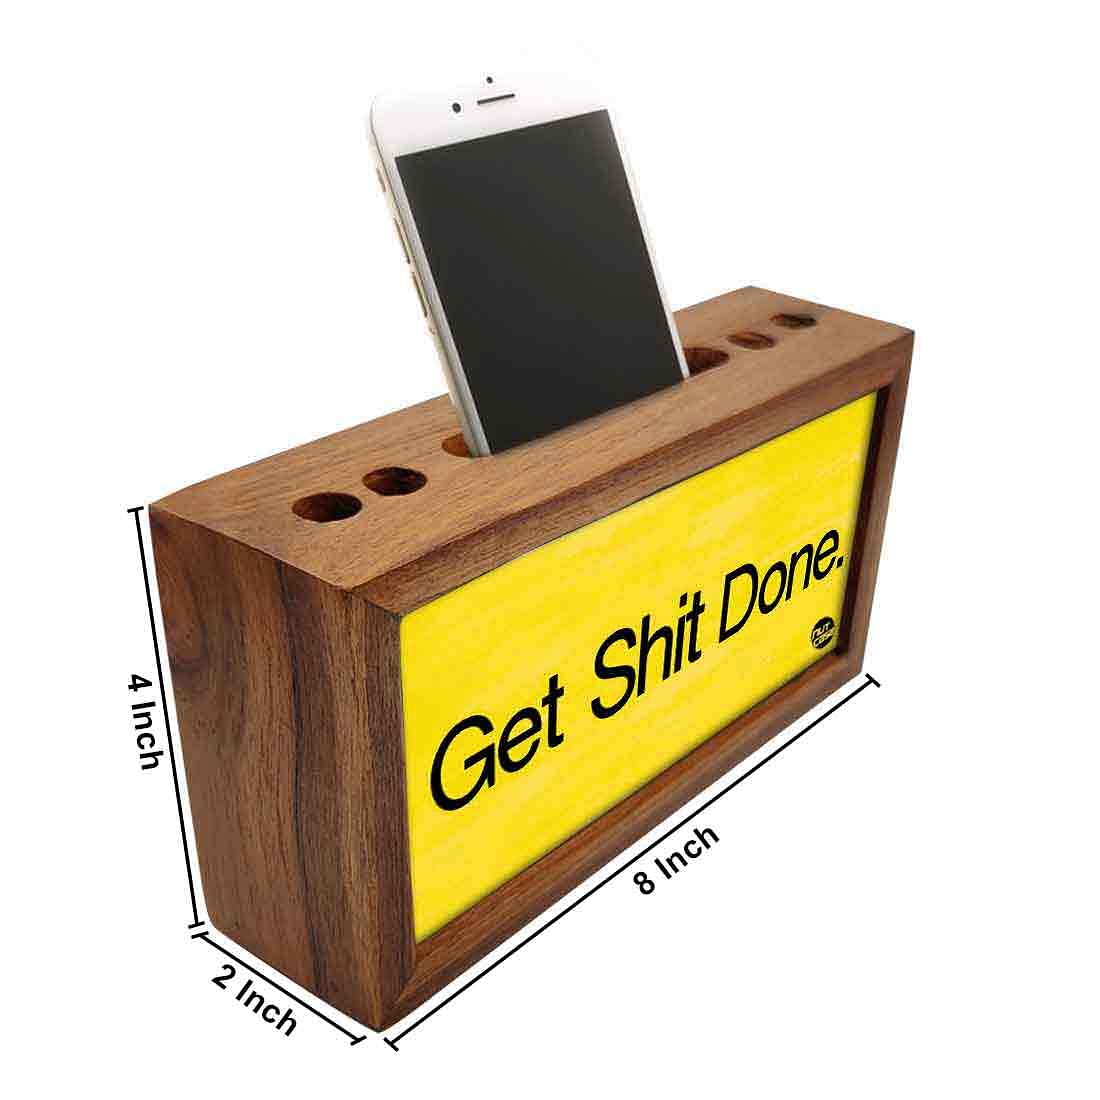 Wooden desktop organizer Pen Mobile Stand - Get Shit Done Nutcase